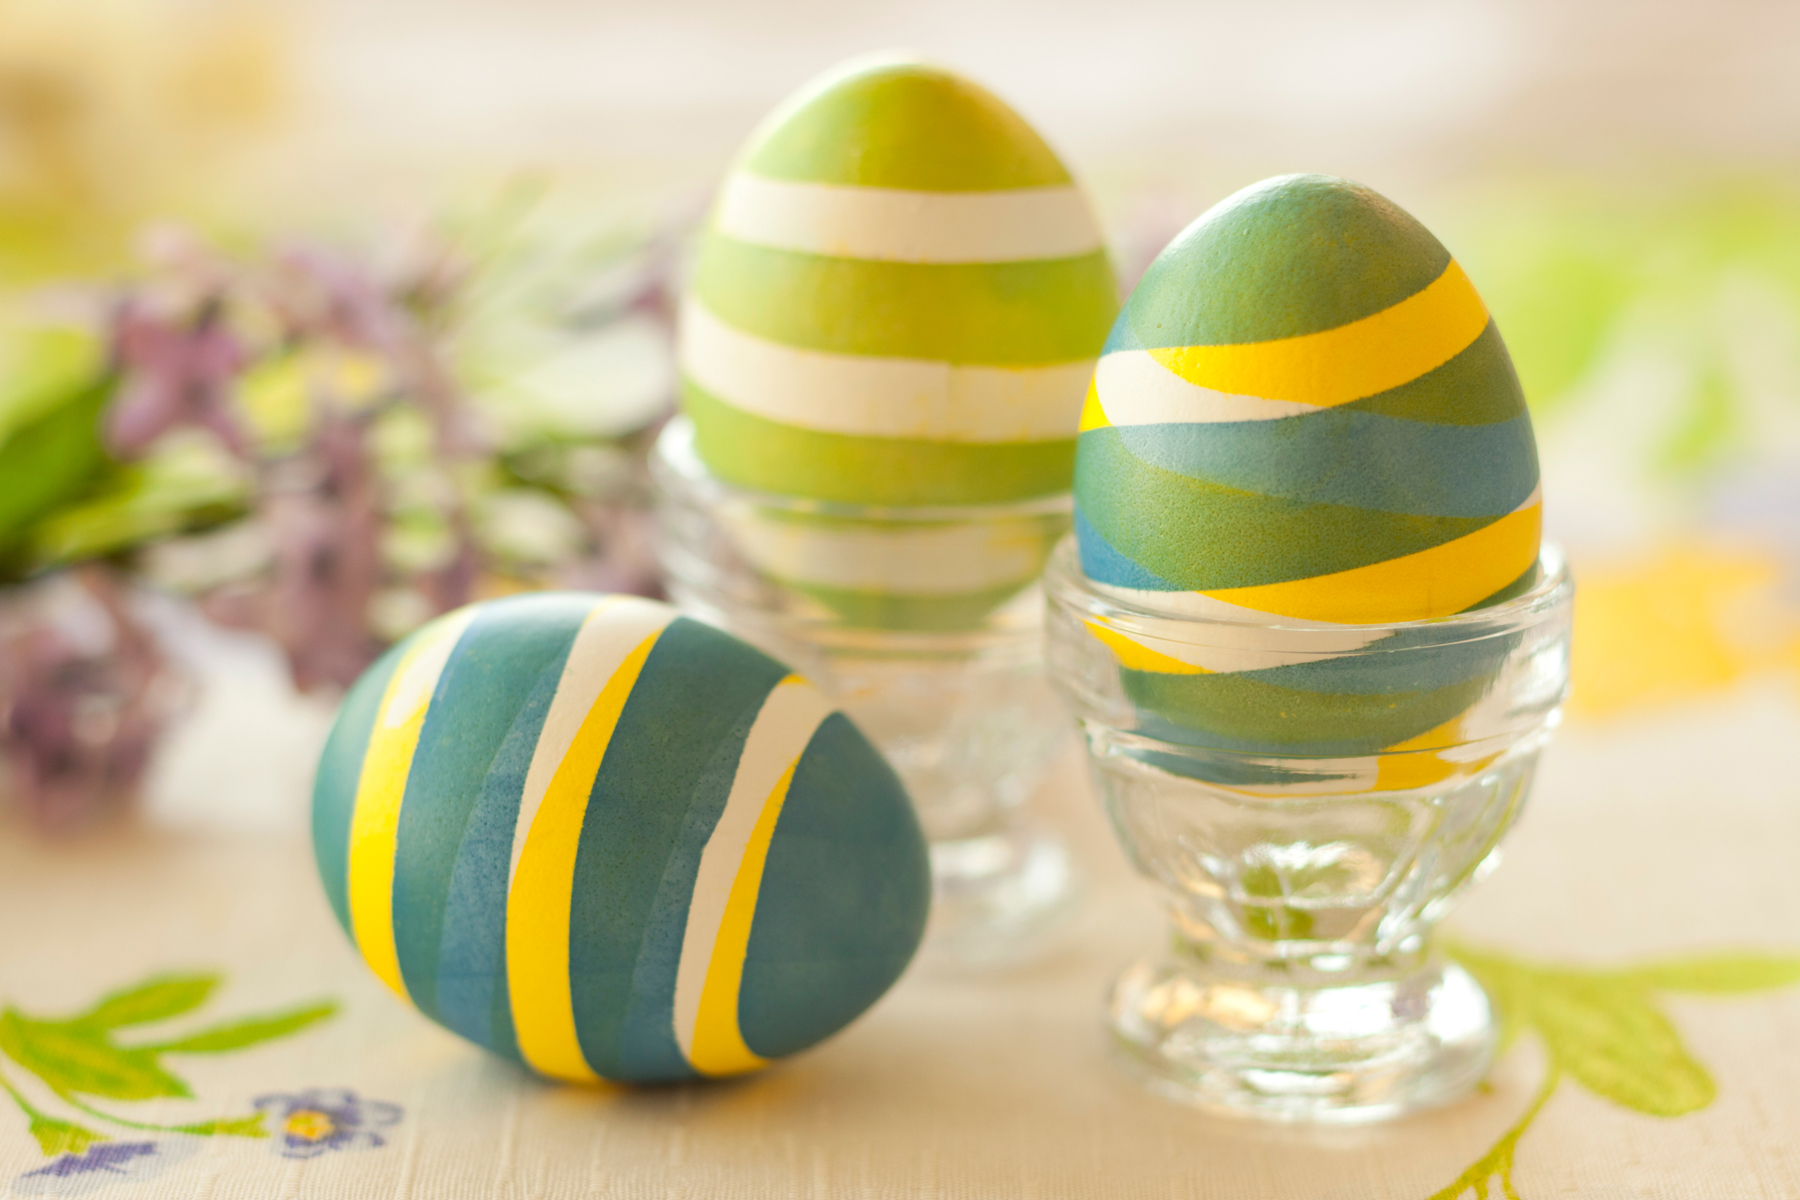 Как покрасить яйца на пасху 2022 – 15 способов покраски яиц в домашних условиях